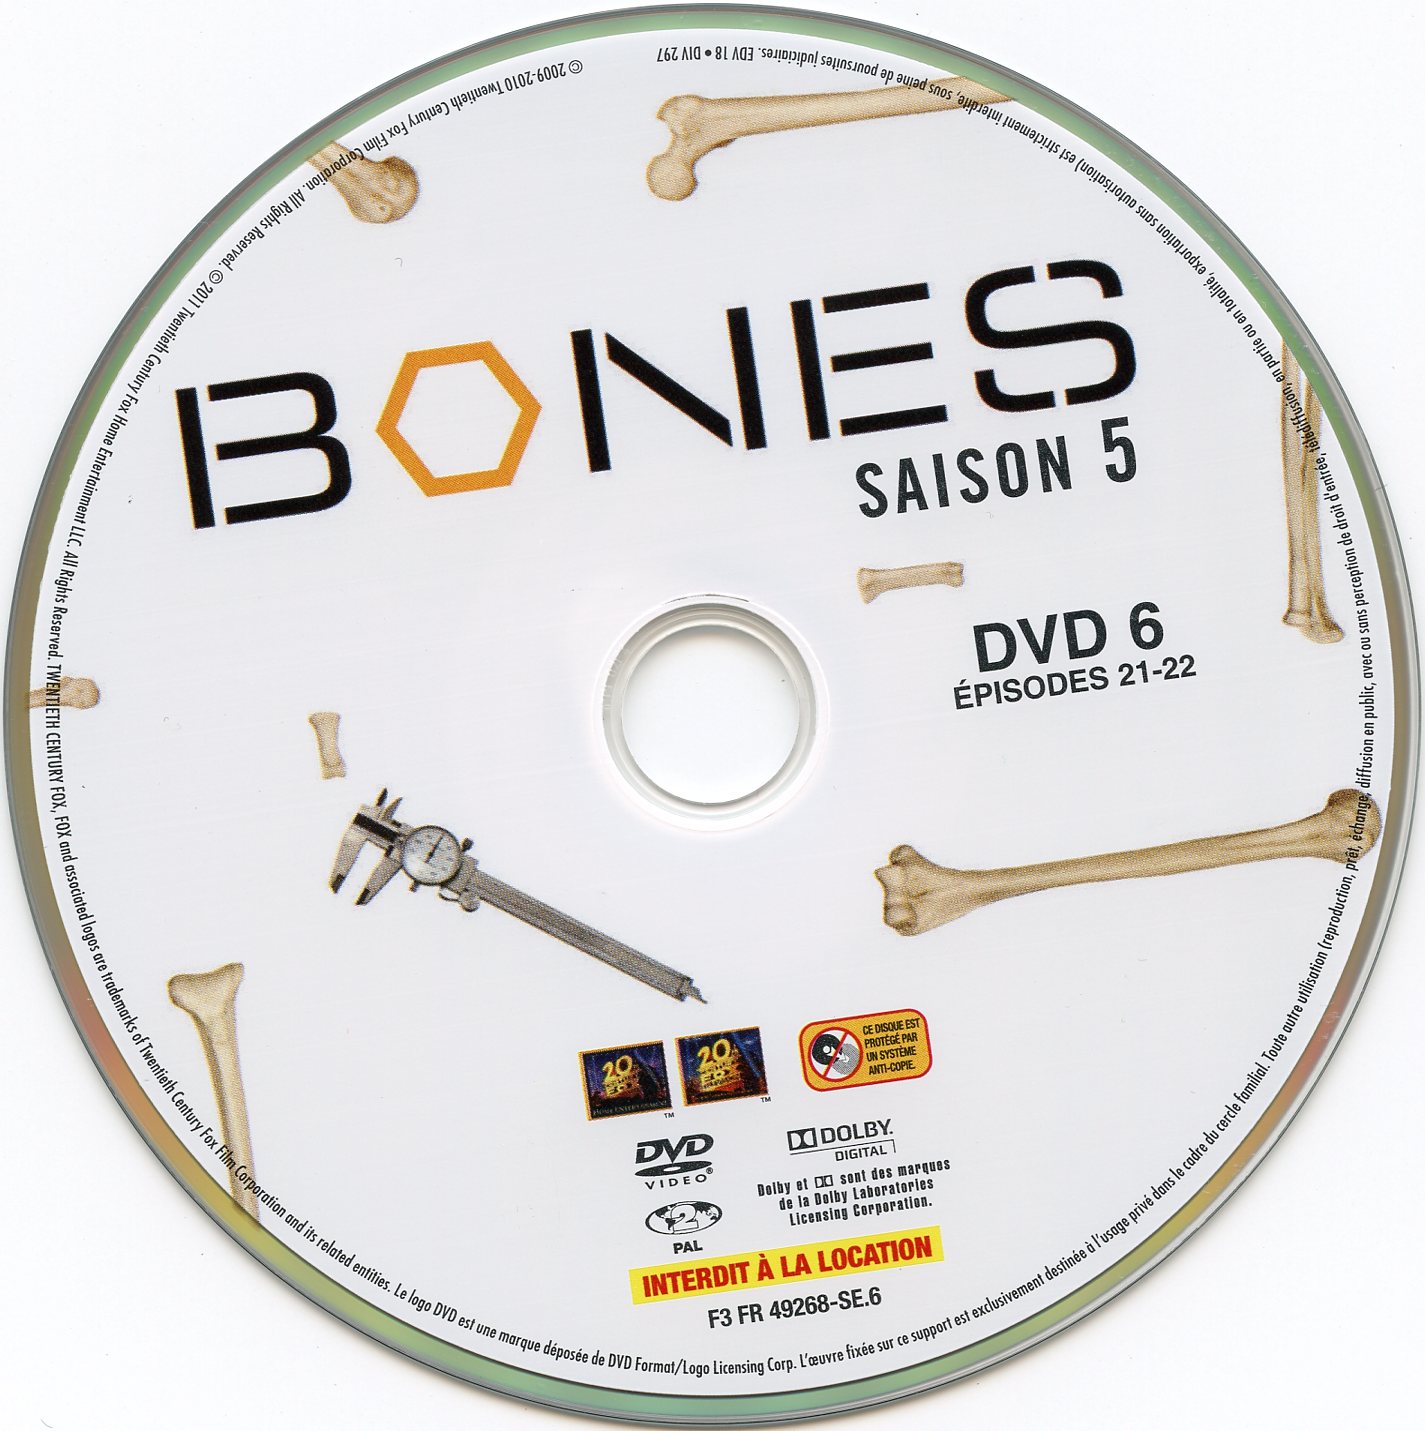 Bones Saison 5 DVD 6